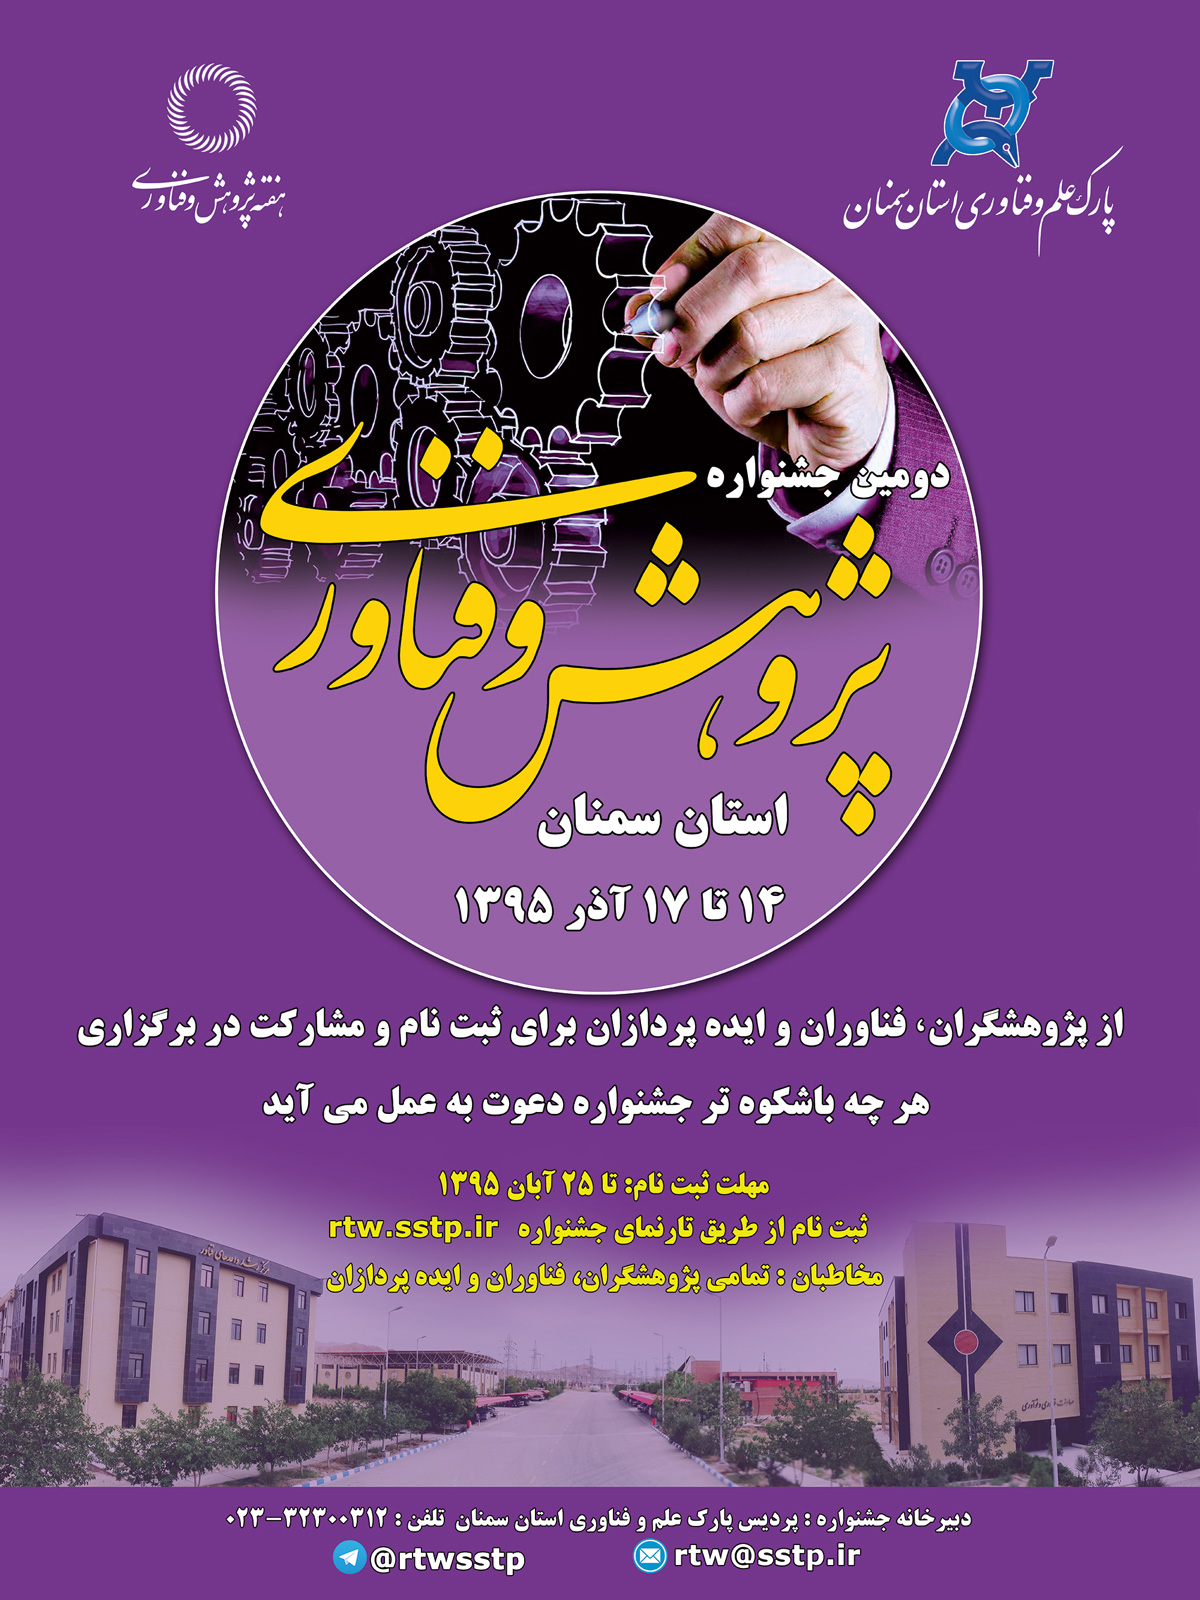 دومین جشنواره هفته پژوهش و فناوری استان سمنان